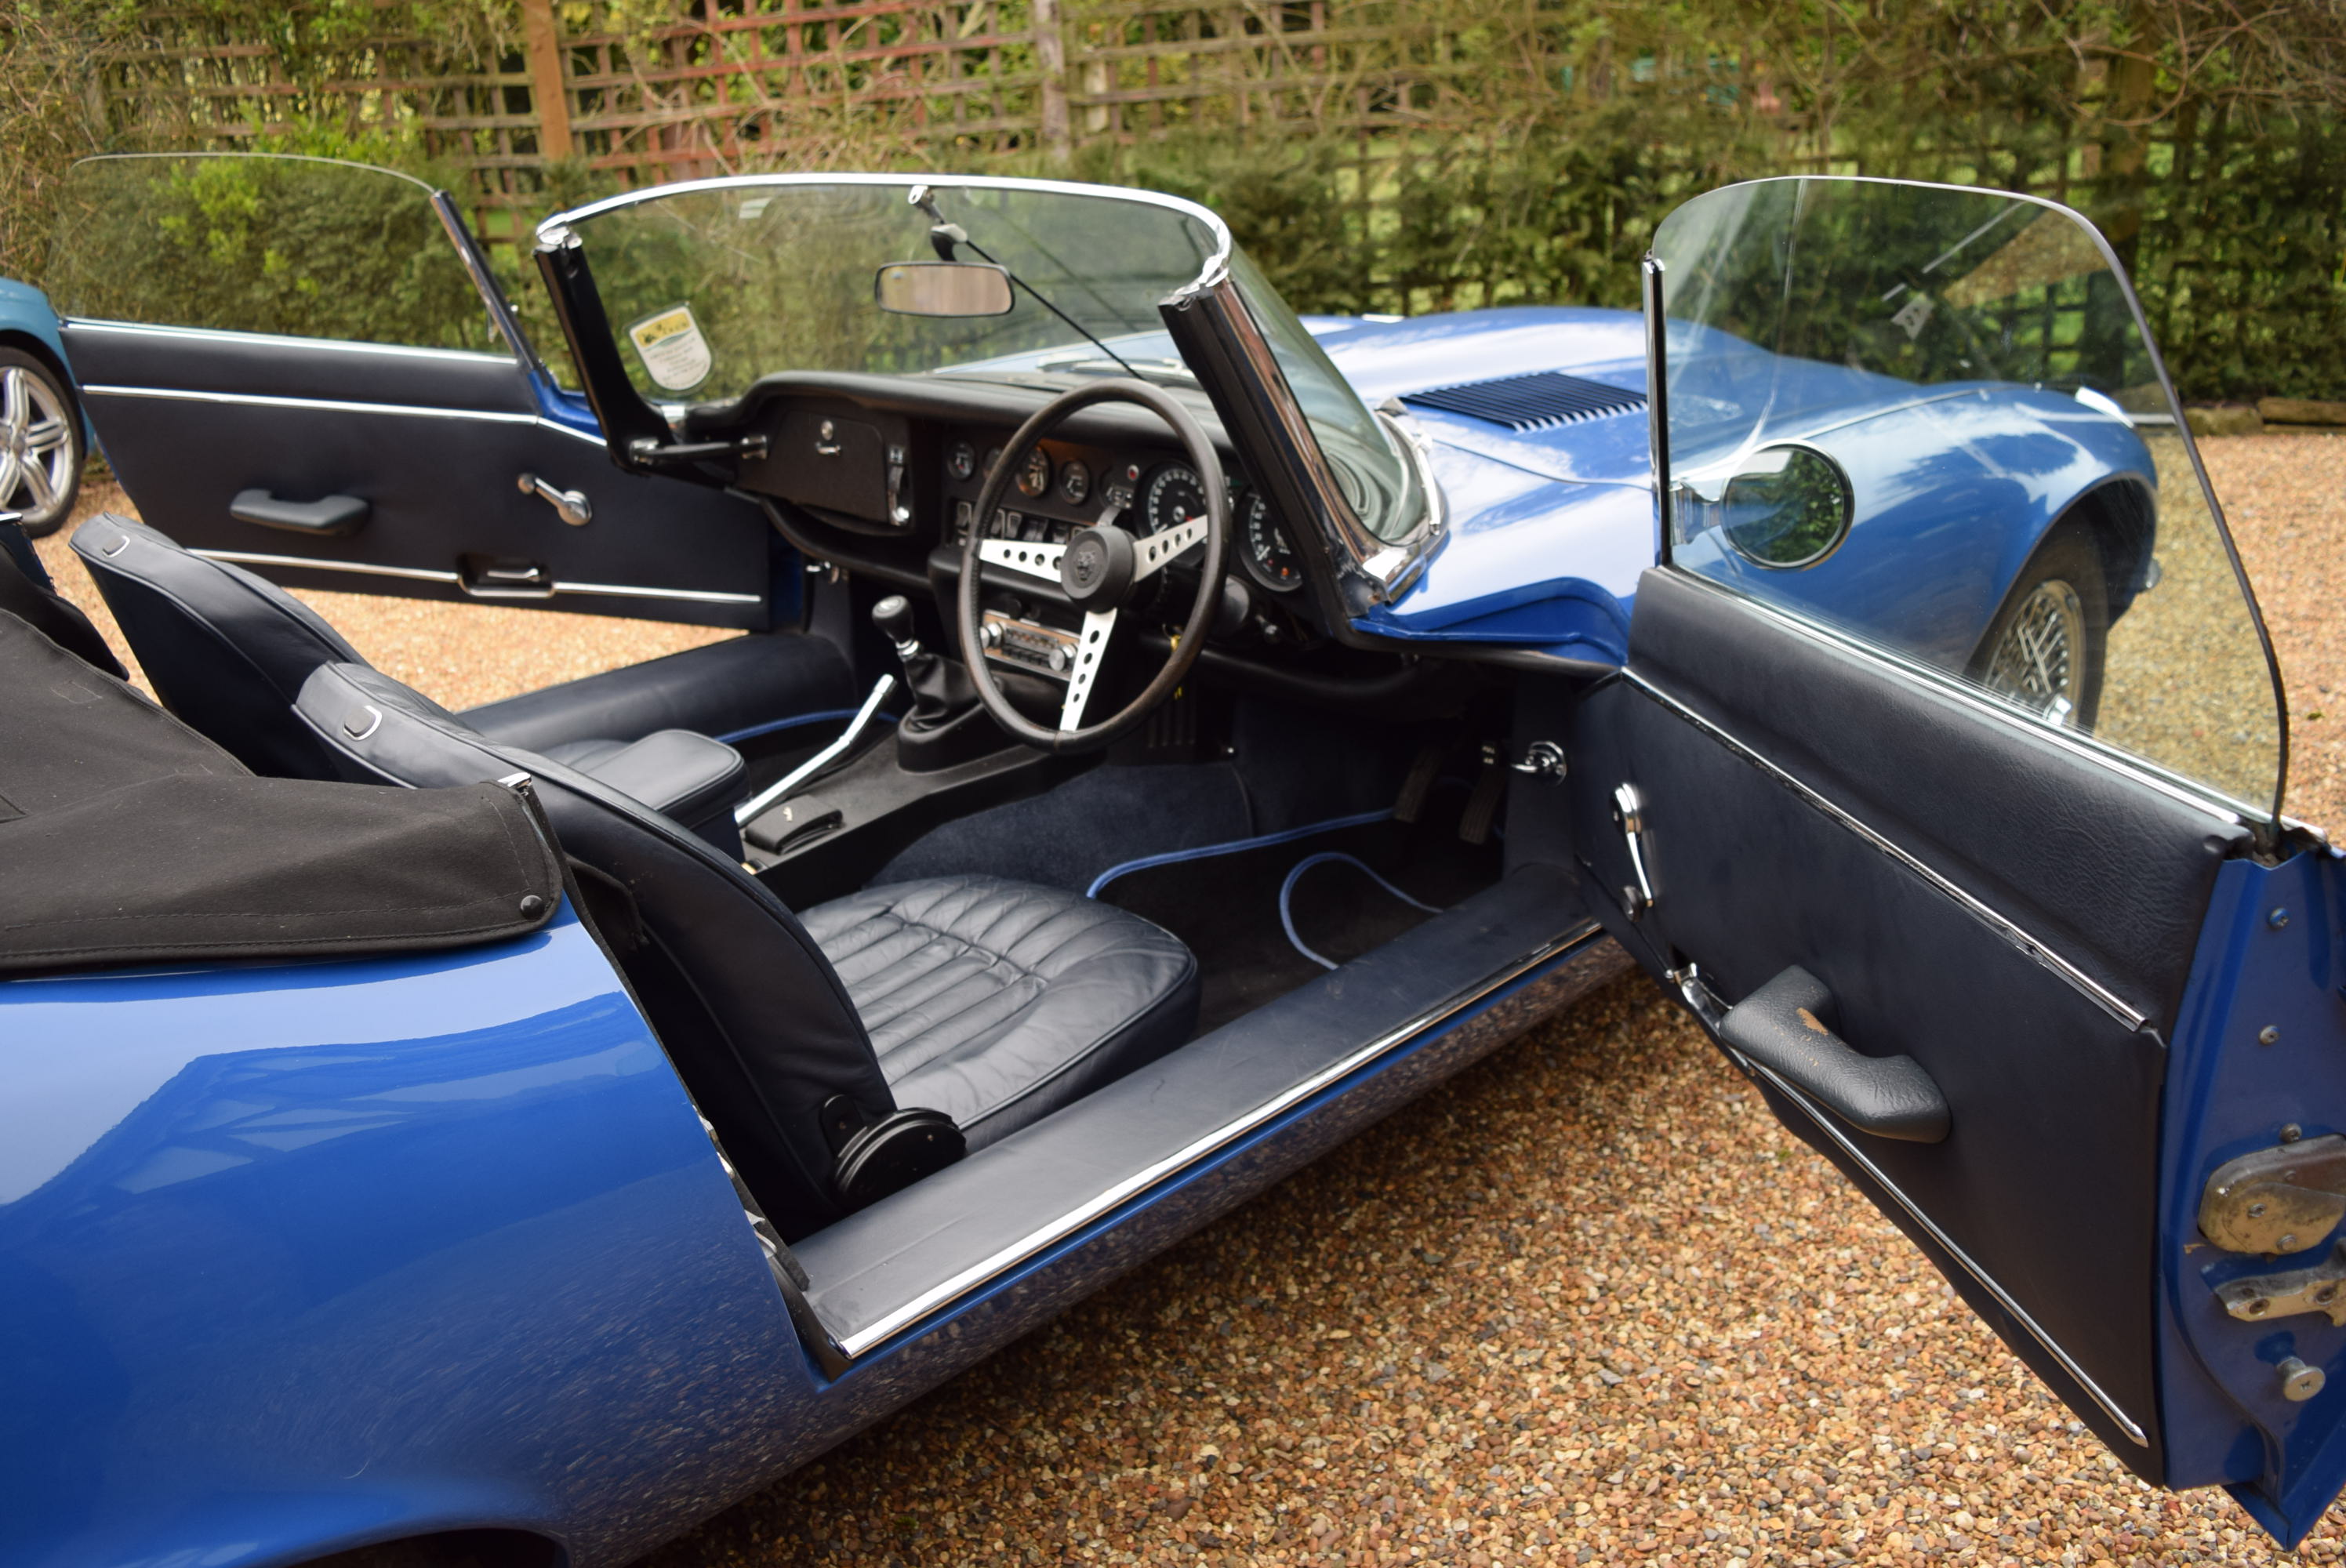 Jaguar E-Type S3 V12 Roadster